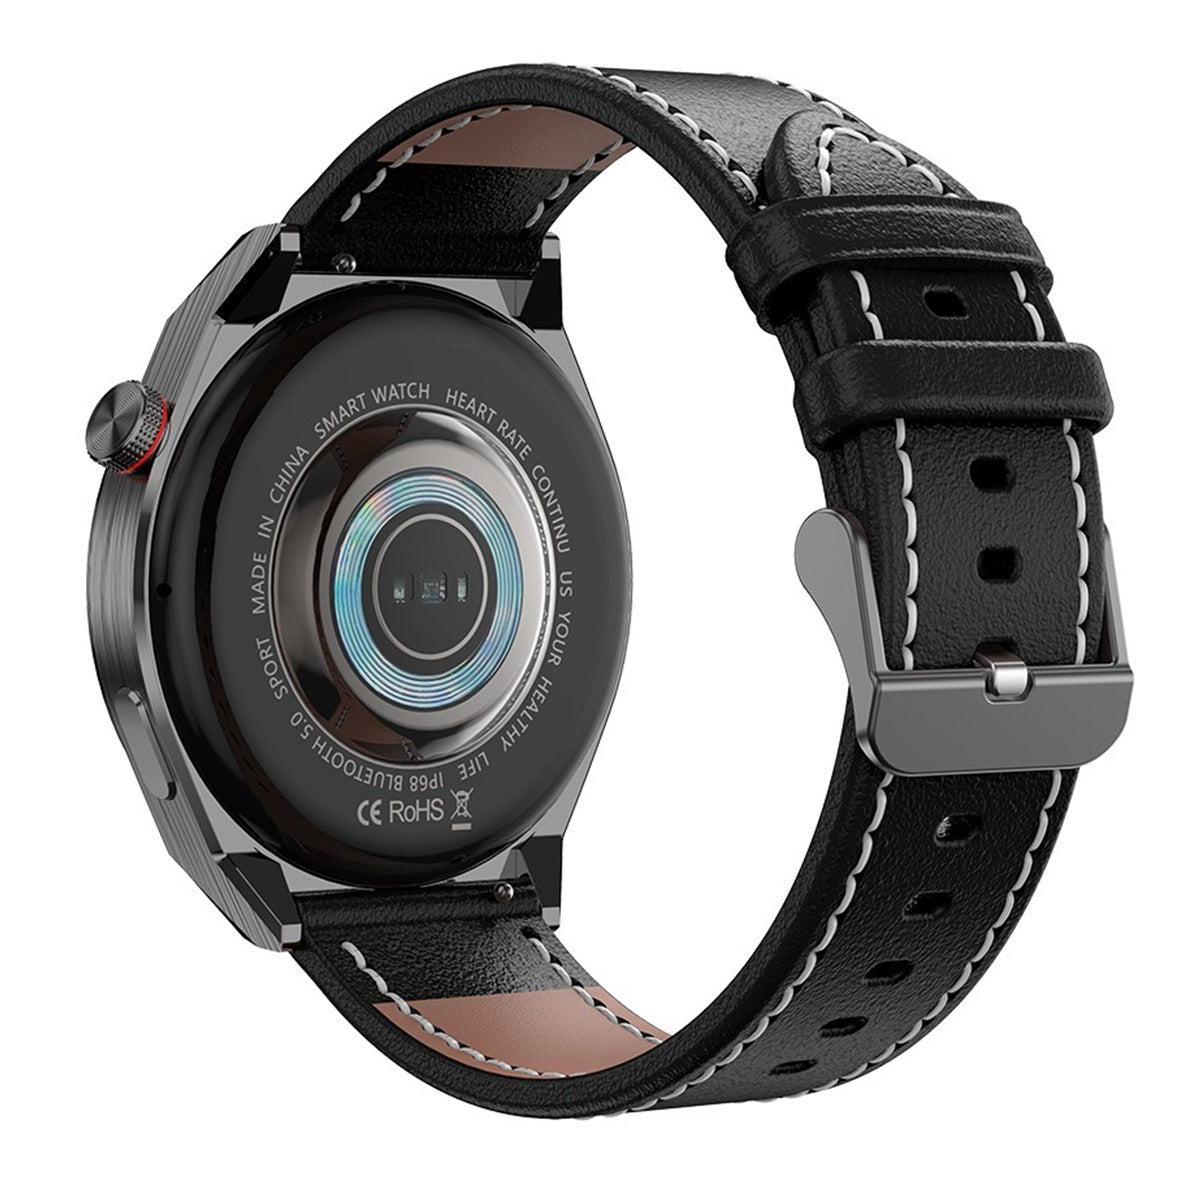 Fralugio Reloj Inteligente Smartwatch Hd3 Max Redondo Ips Hd